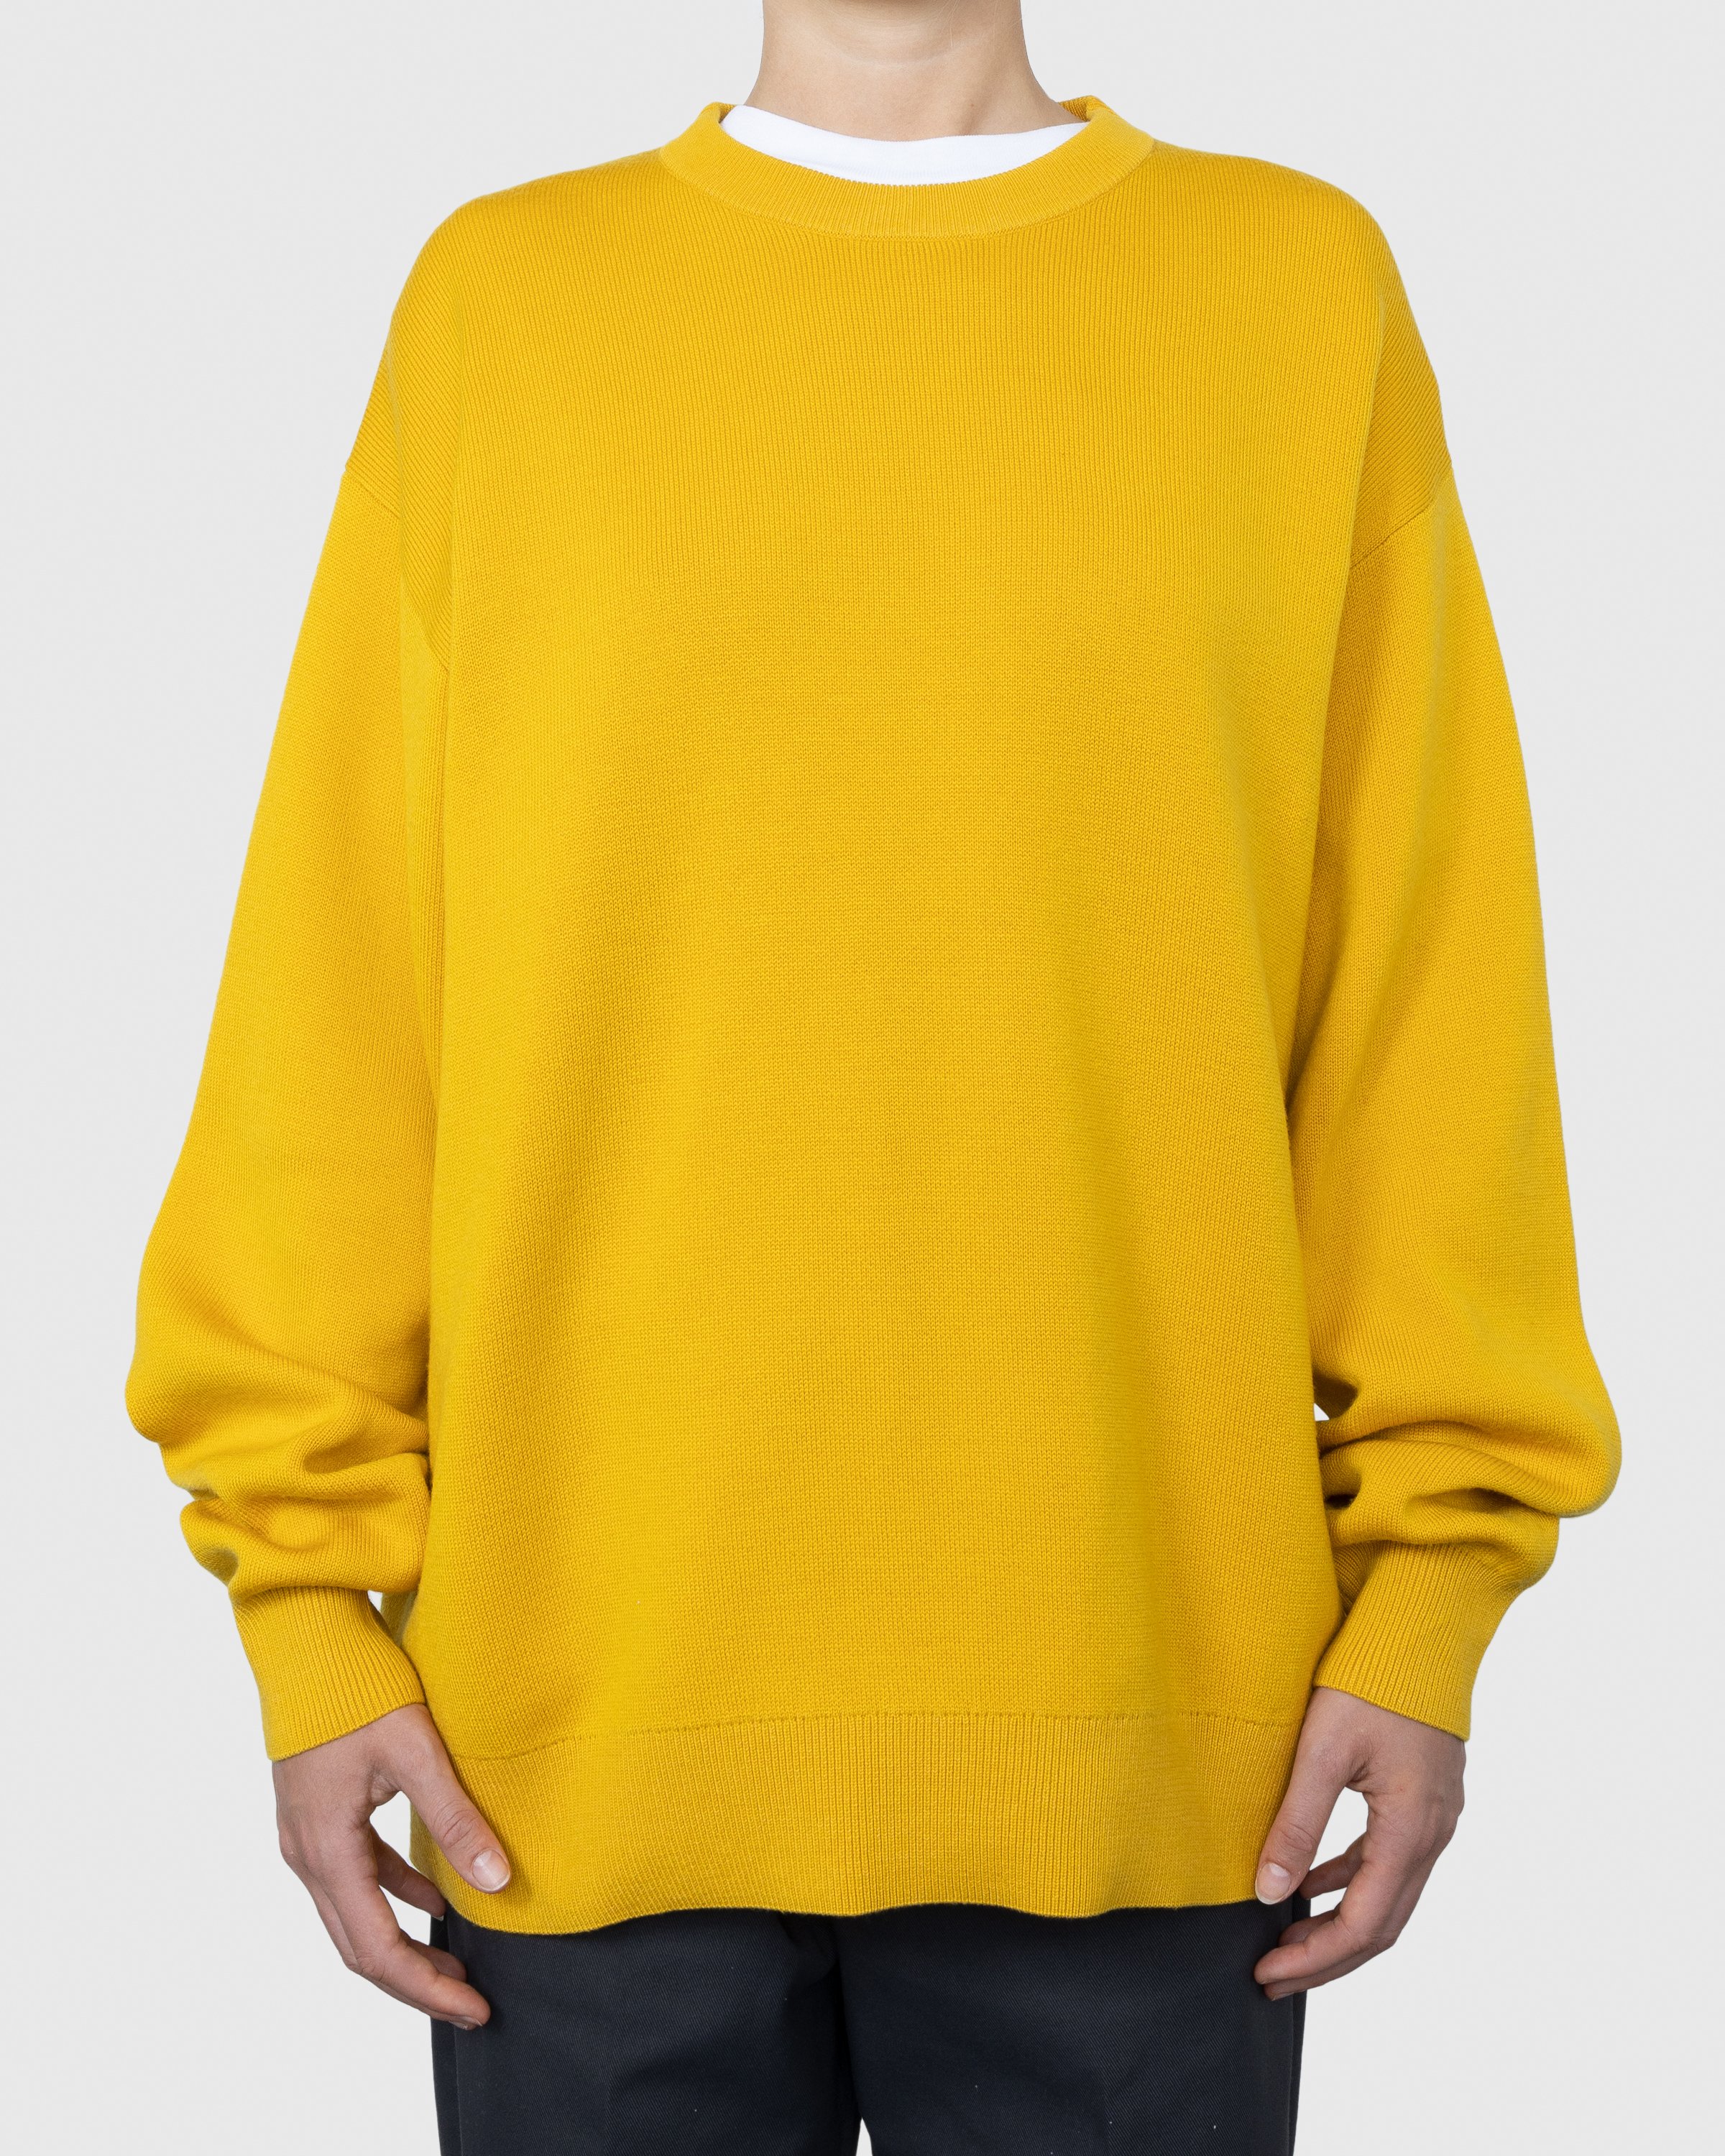 Acne Studios - Merino Wool Crewneck Sweater Yellow - Clothing - Yellow - Image 2